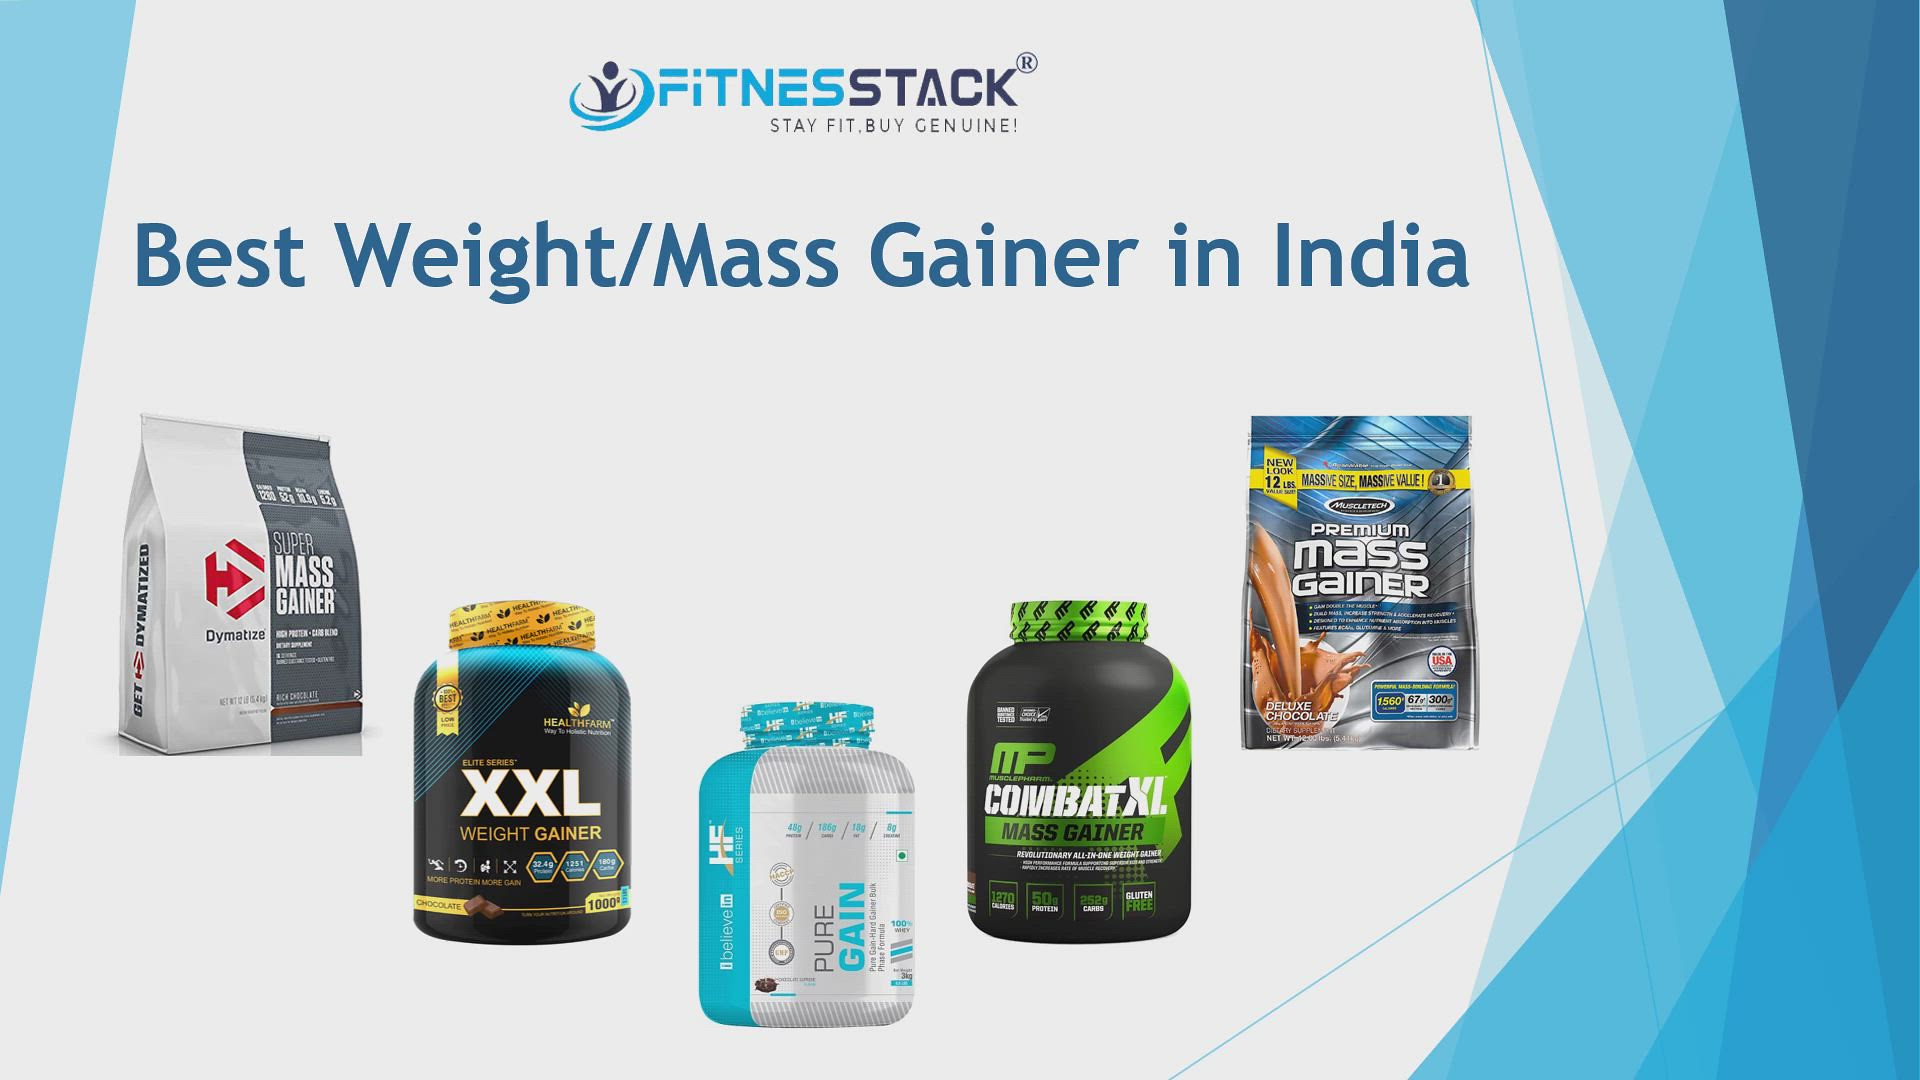 Best Weight/Mass Gainer in India